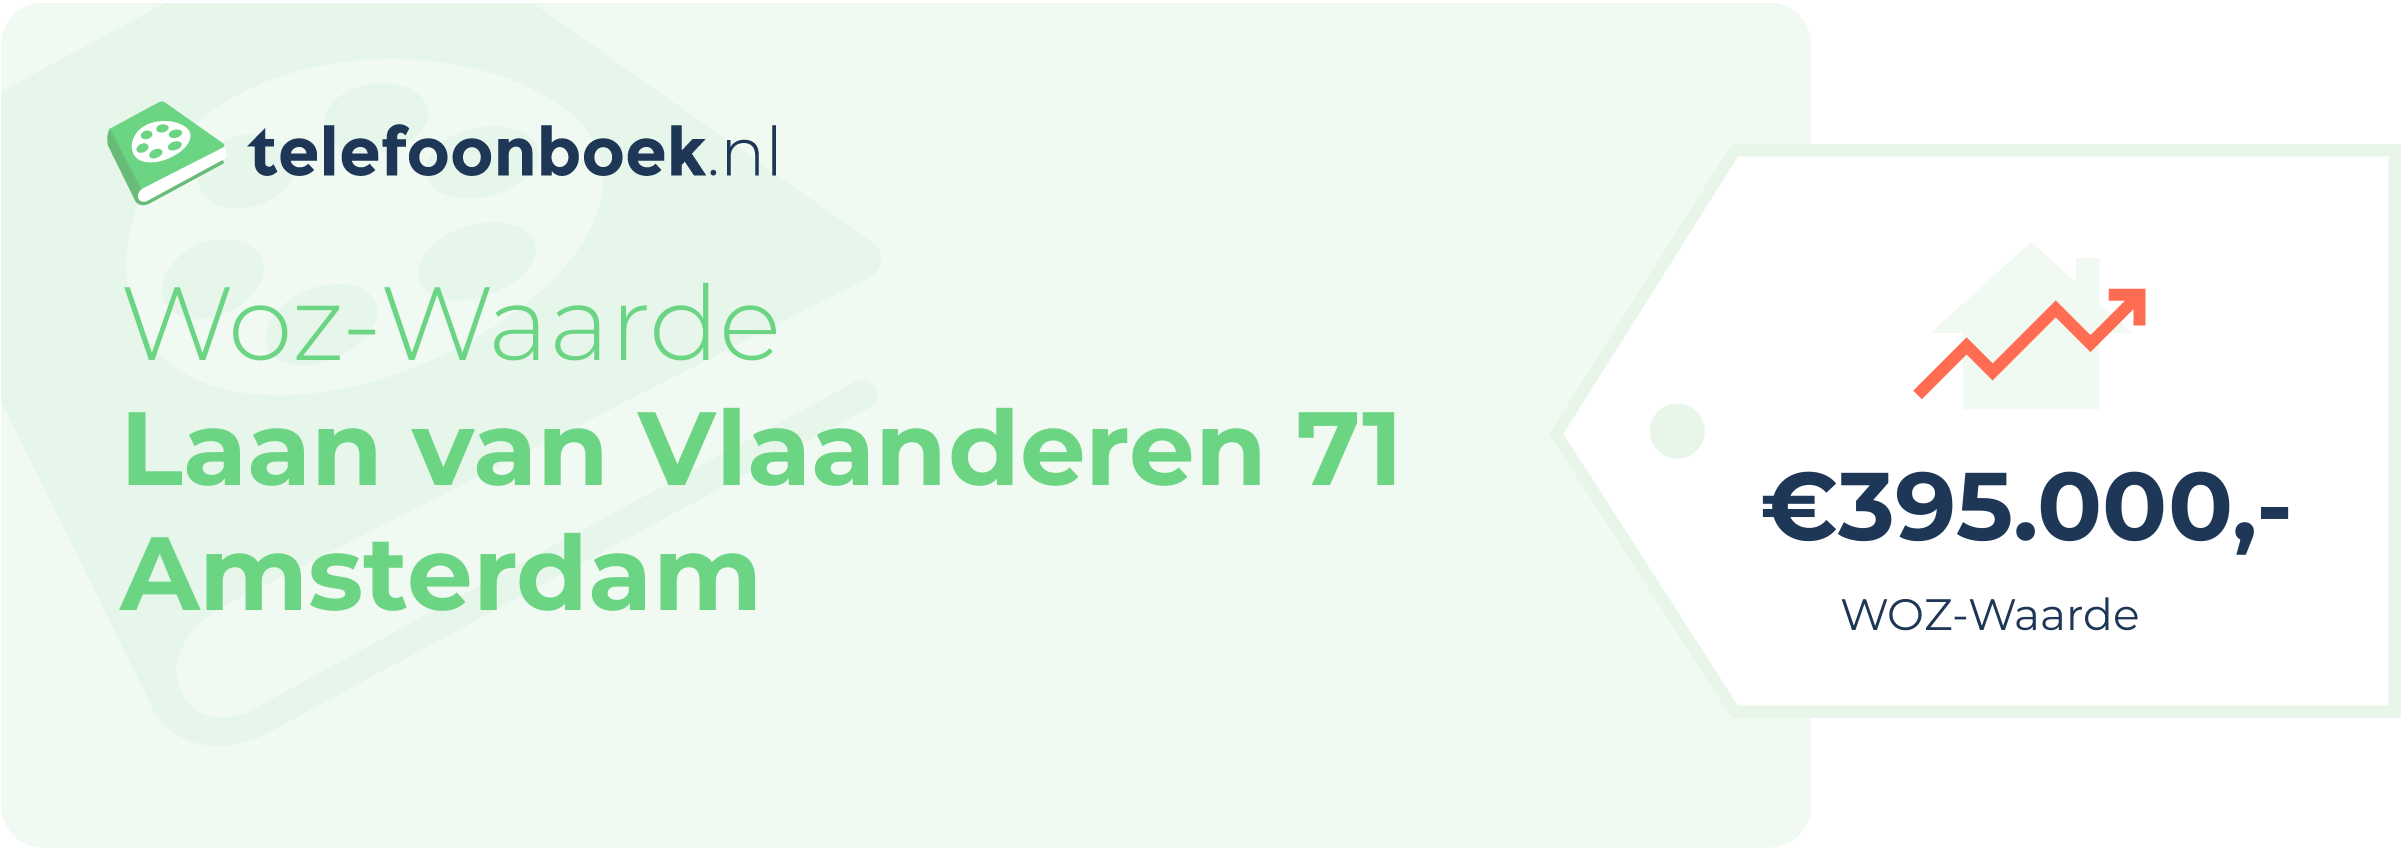 WOZ-waarde Laan Van Vlaanderen 71 Amsterdam